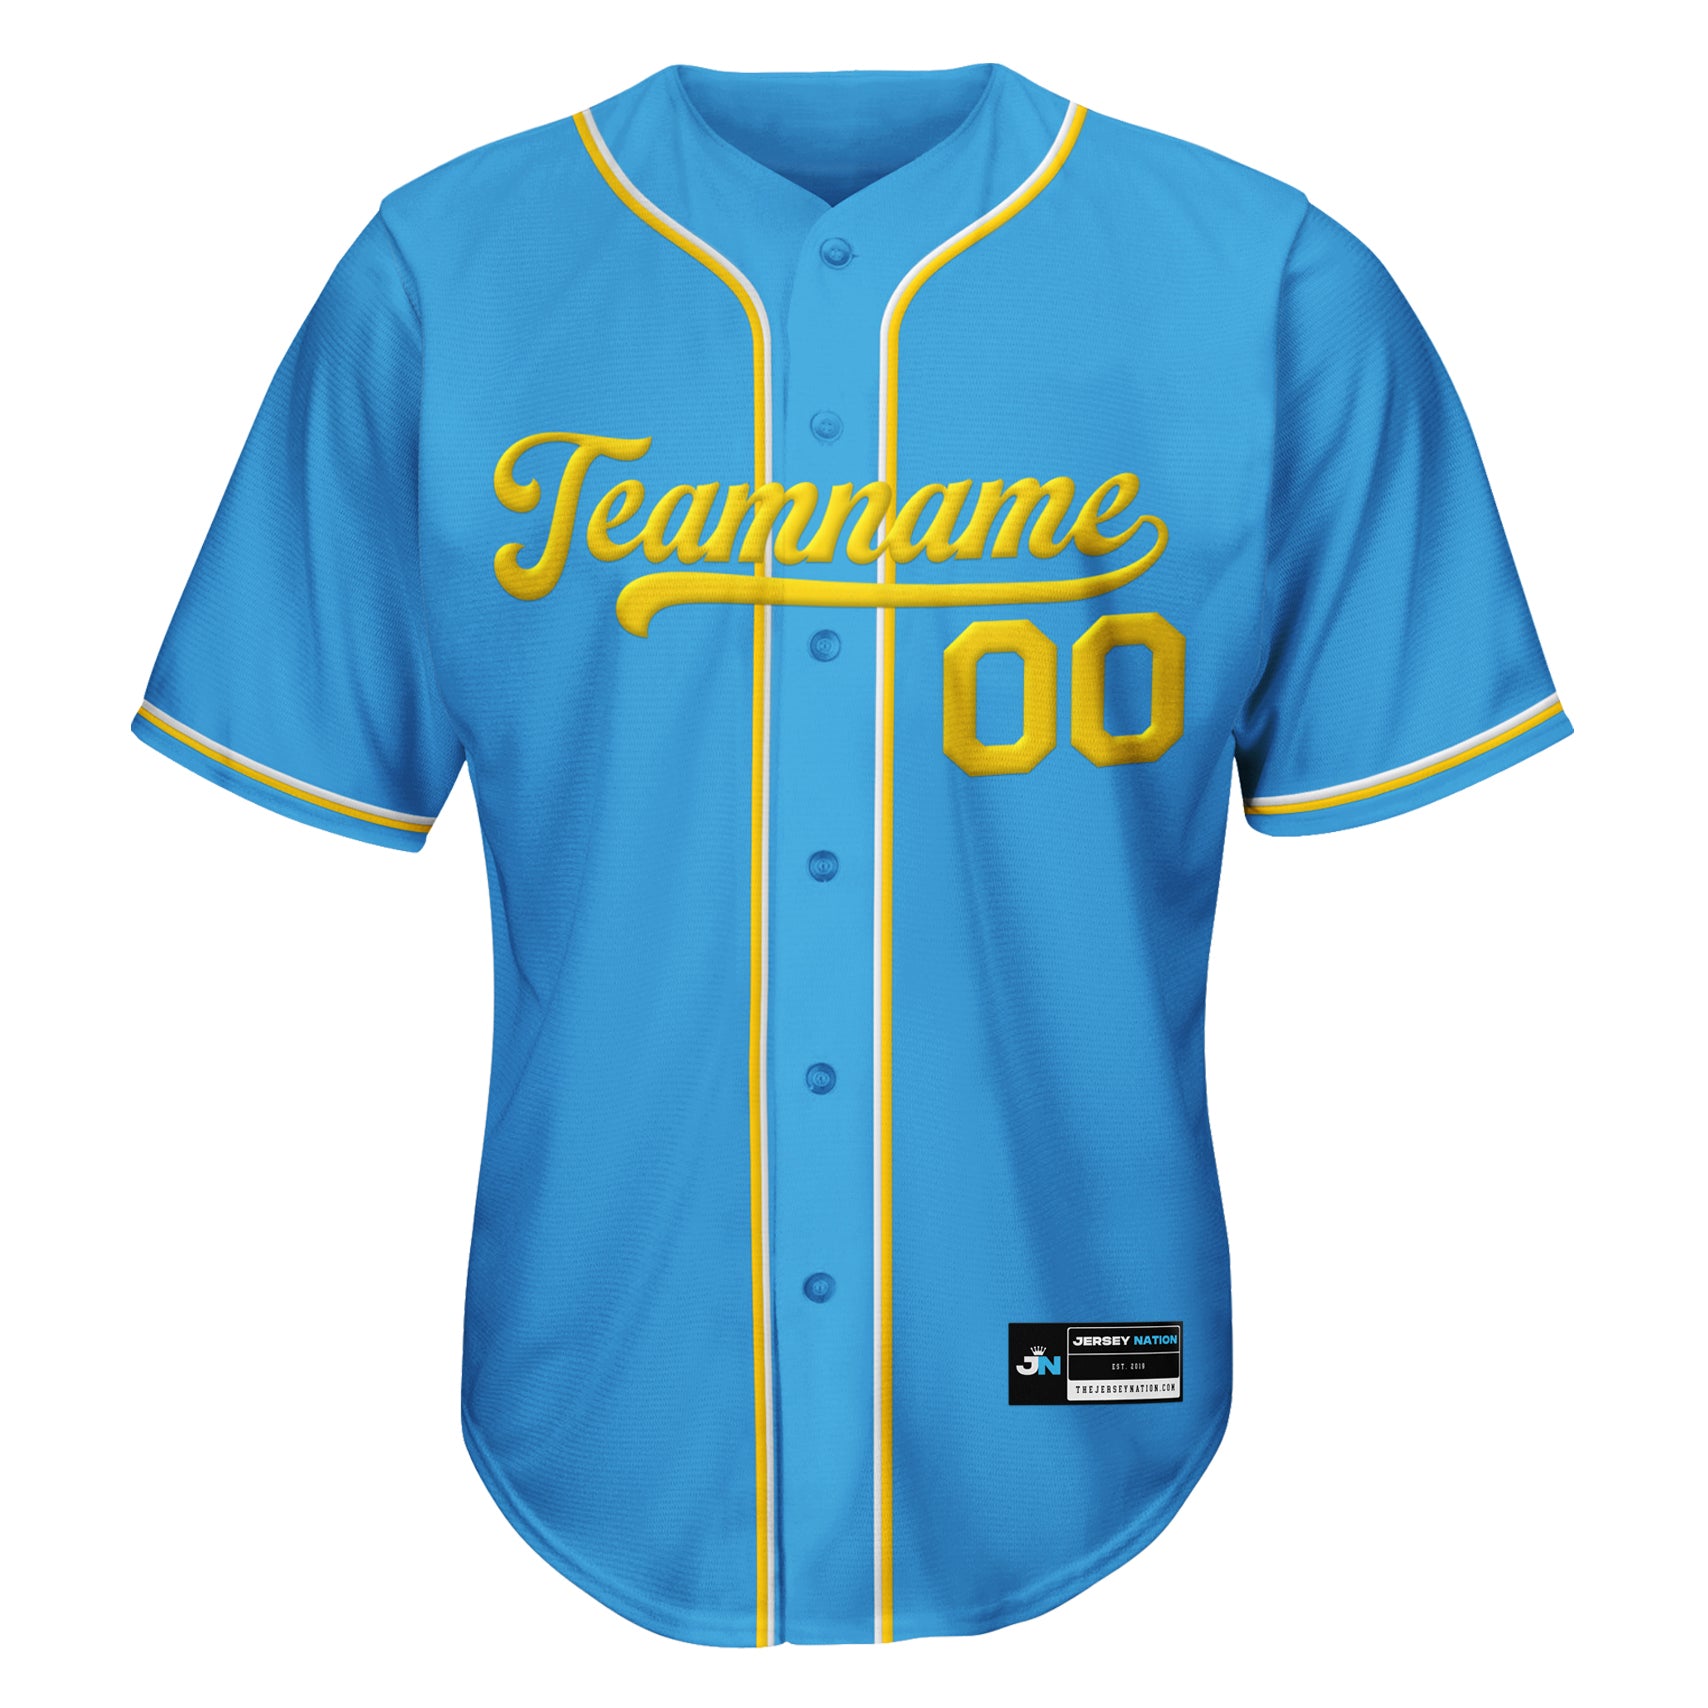 blue-yellow Custom Baseball Jersey - XL